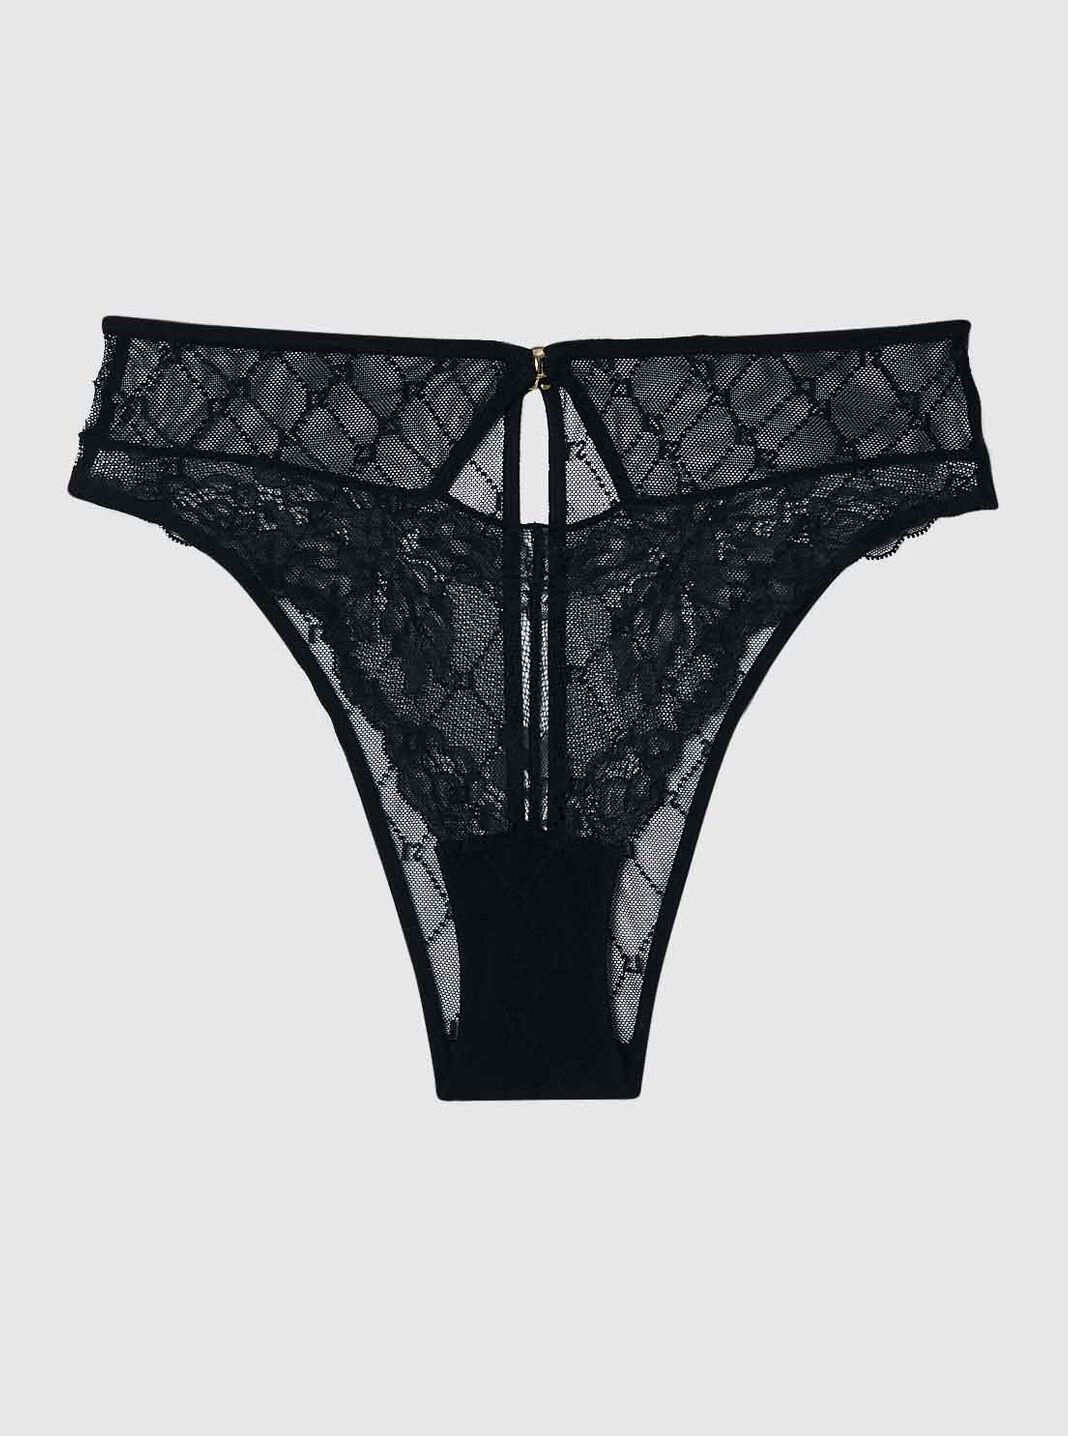 La Senza Sexy Lace Bra and Panty/Garter Lingerie Set Black &White NWT Size  S